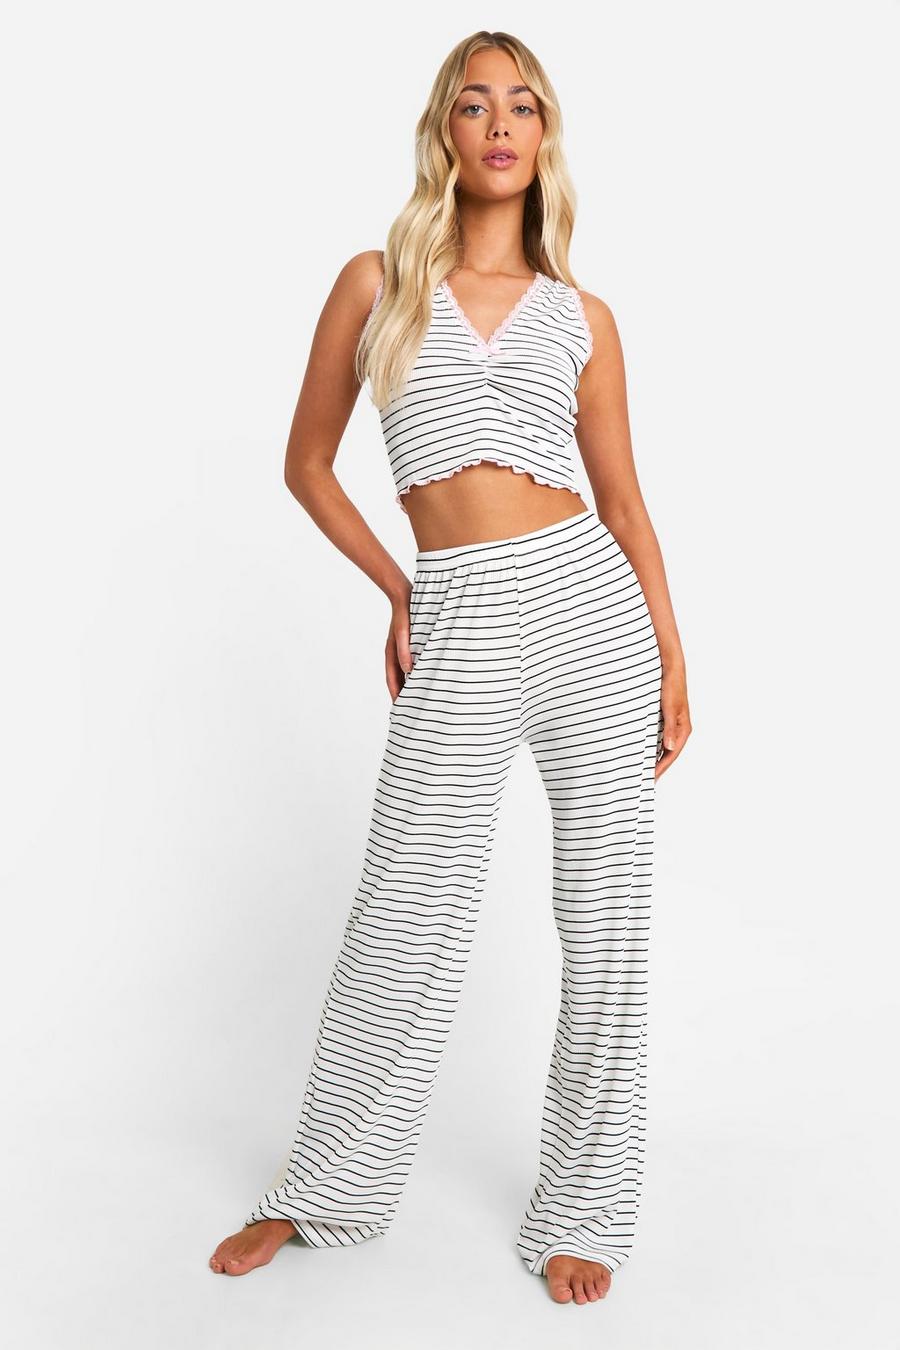 Cream Stripe Lace Tank Top And Pants Pajama Set image number 1